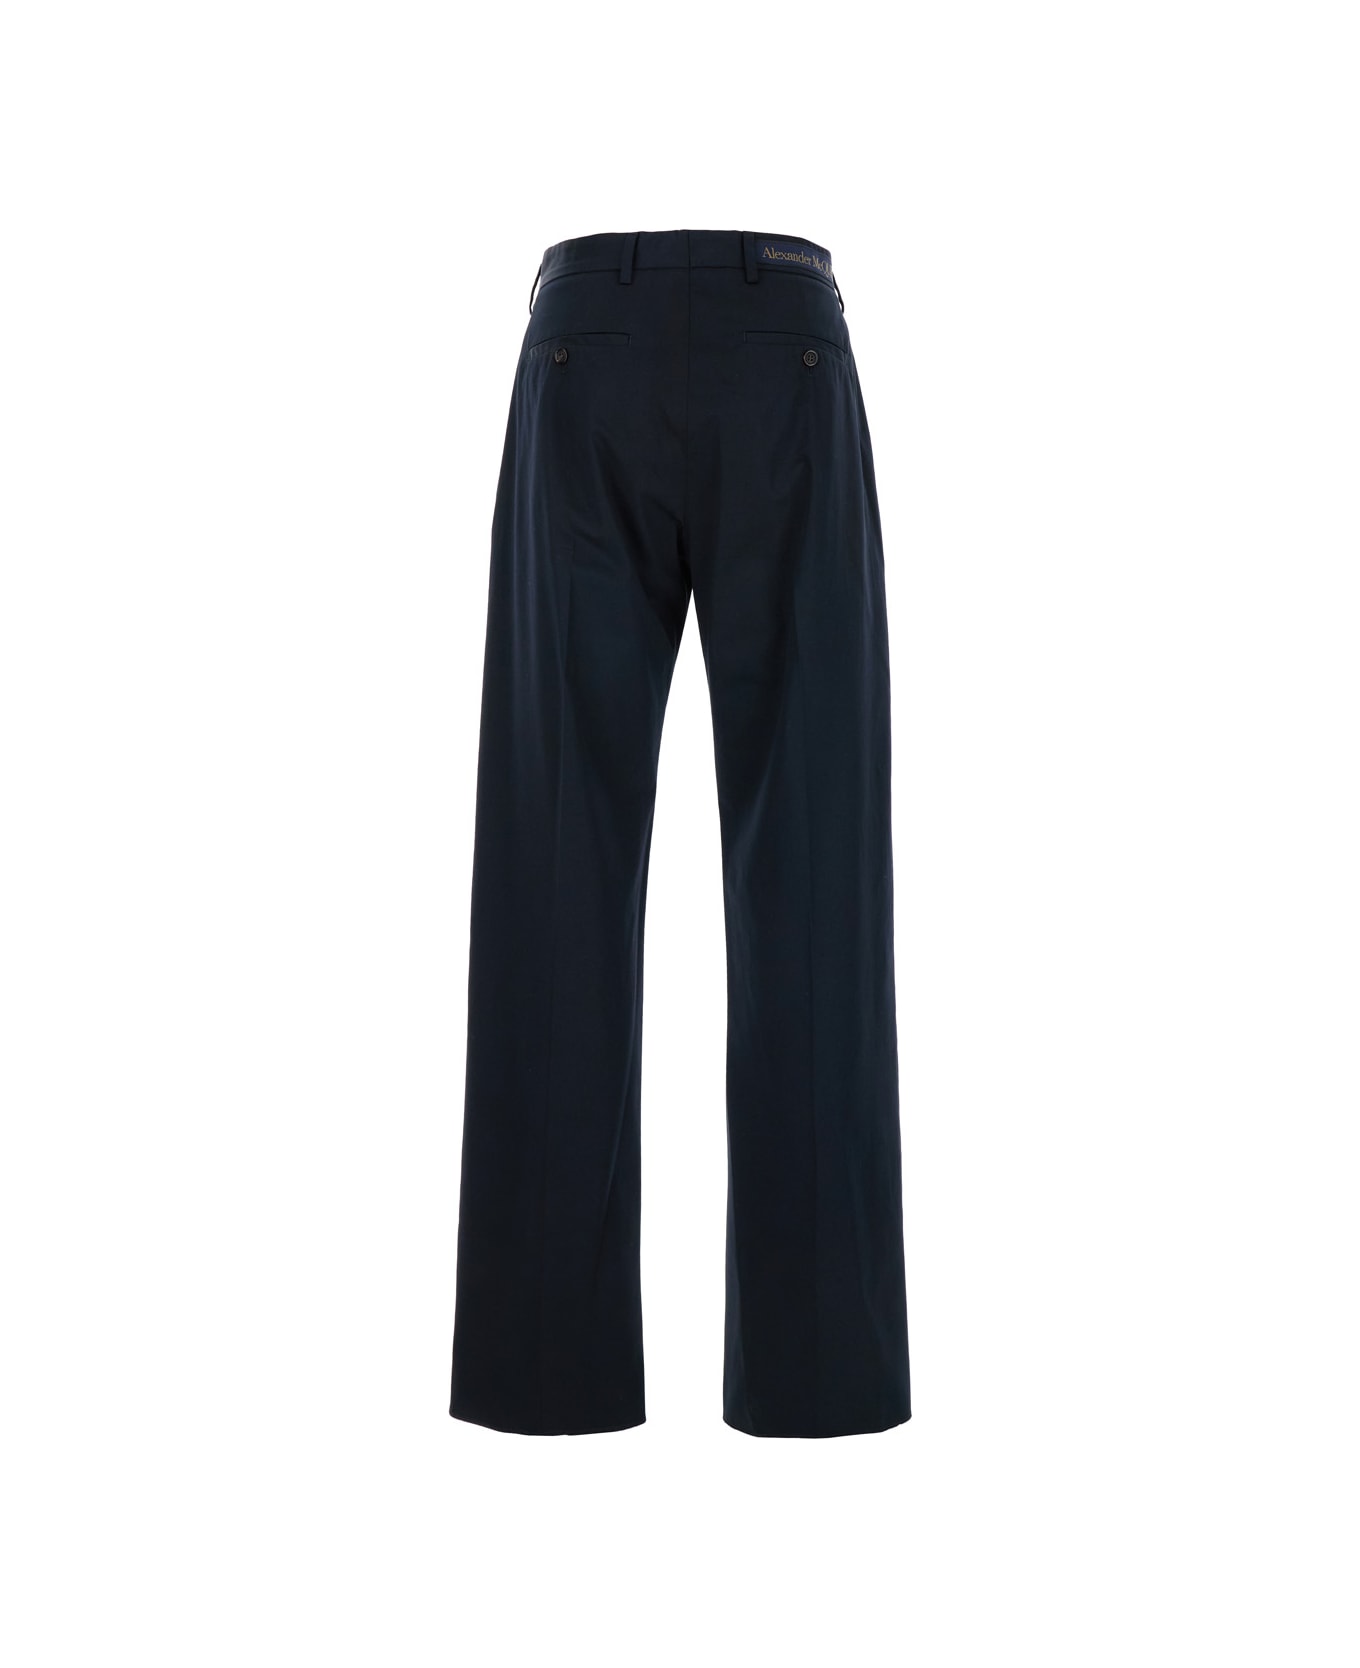 Alexander McQueen Blue Straight Tailored Pants In Cotton Man - Blu